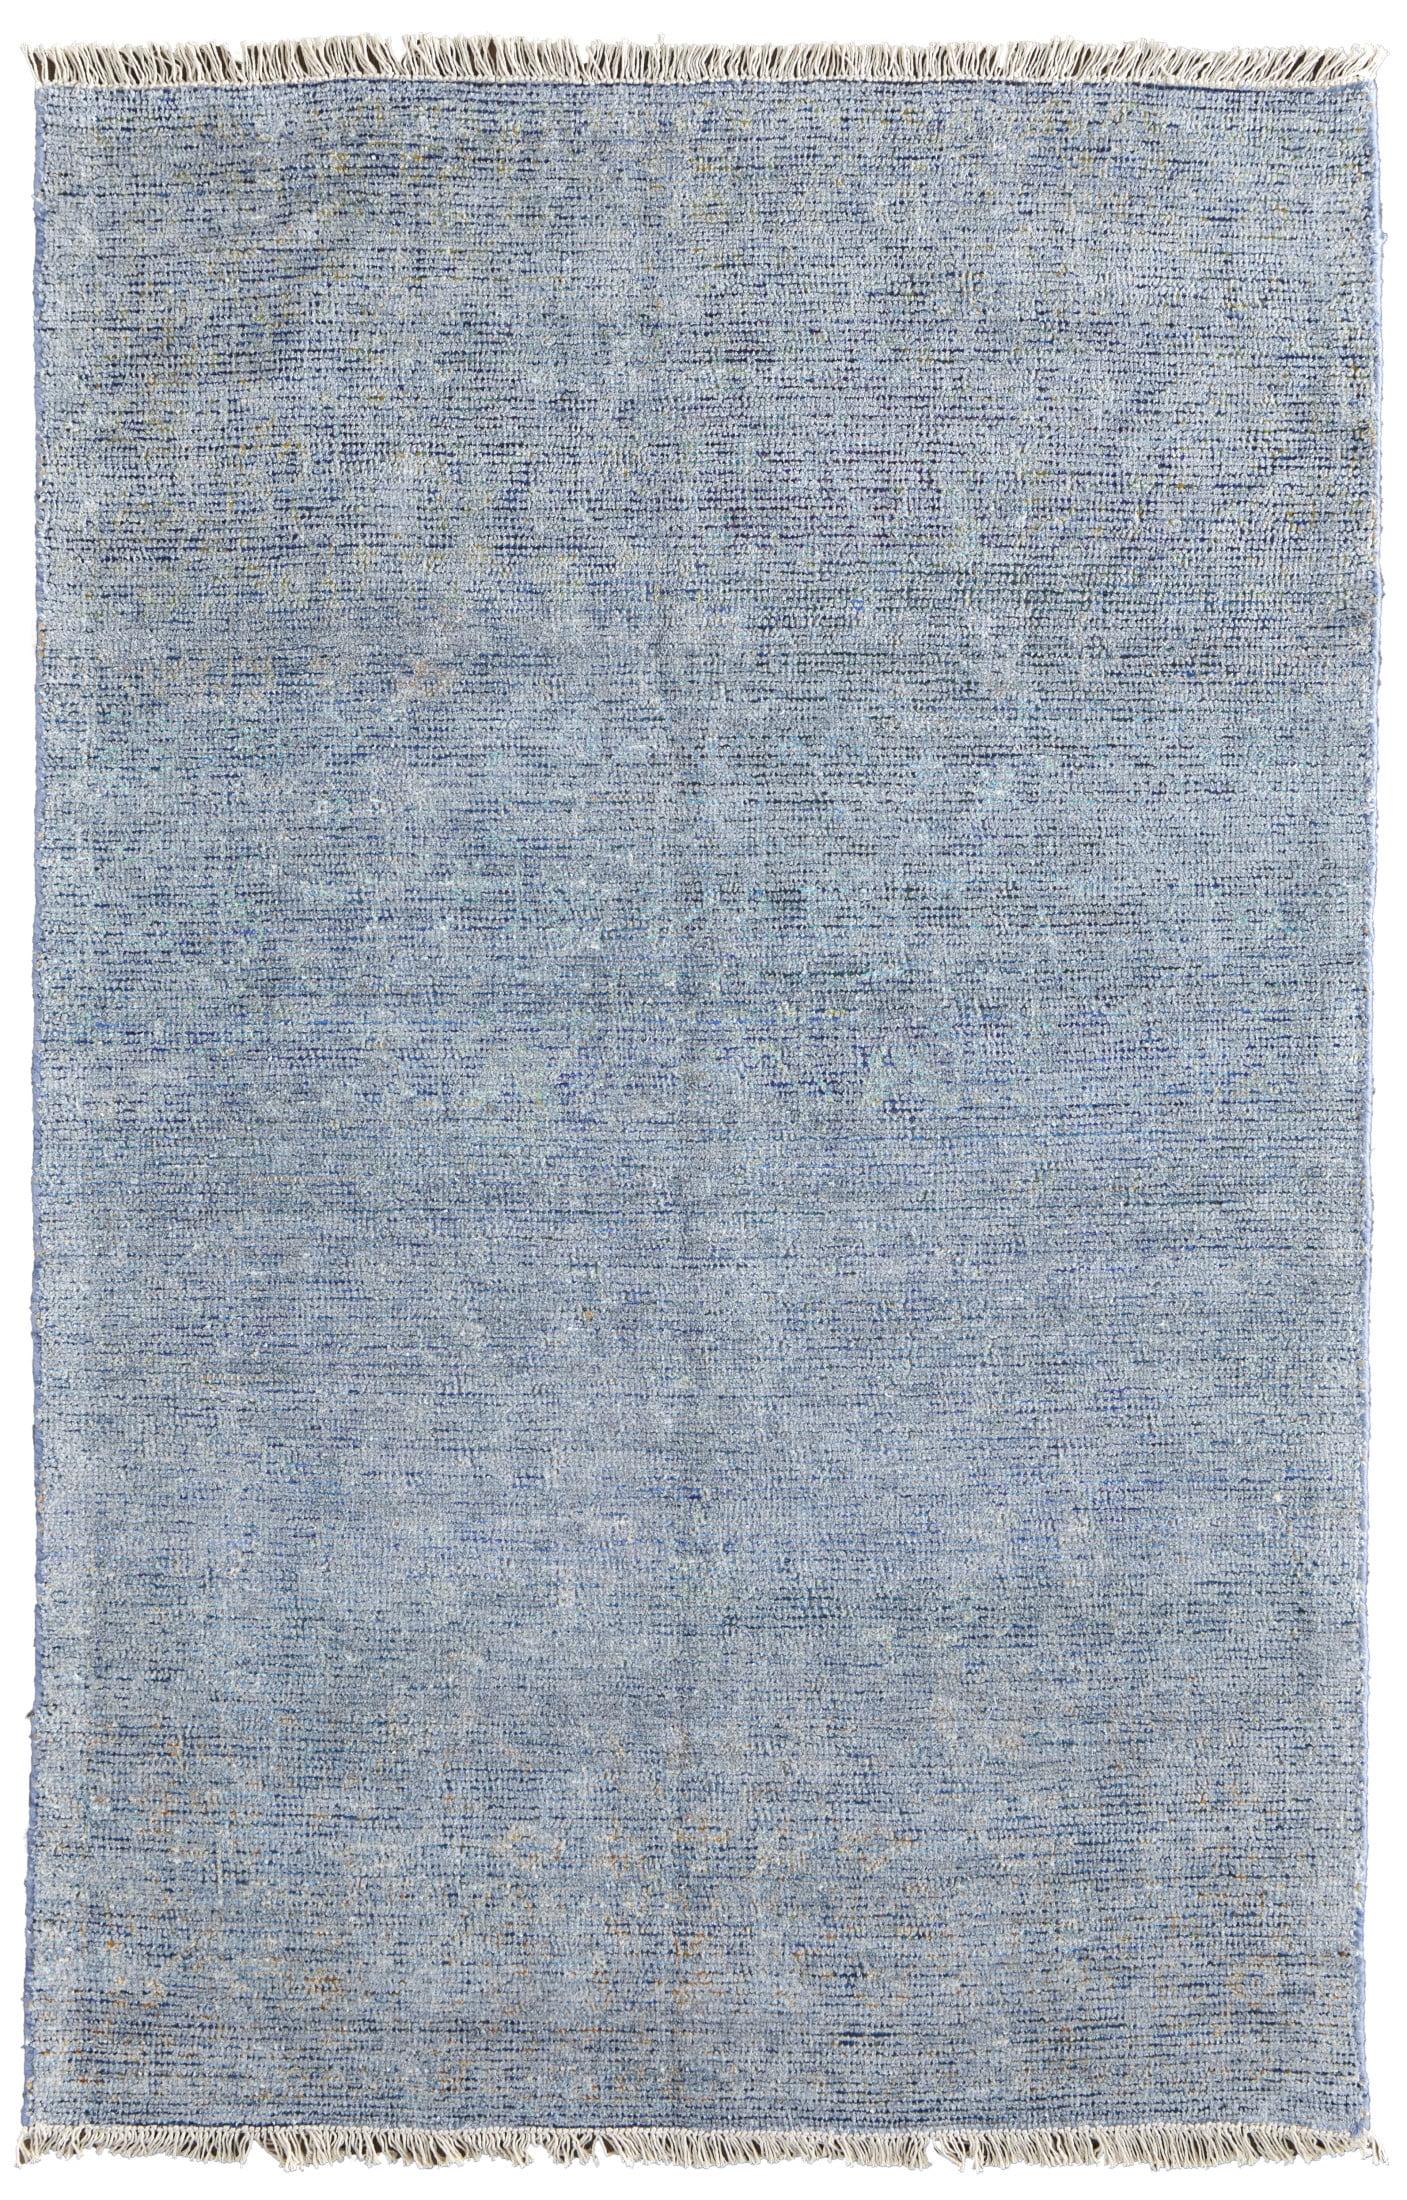 Handmade Tufted Wool-Viscose Blend Reversible Area Rug in Blue